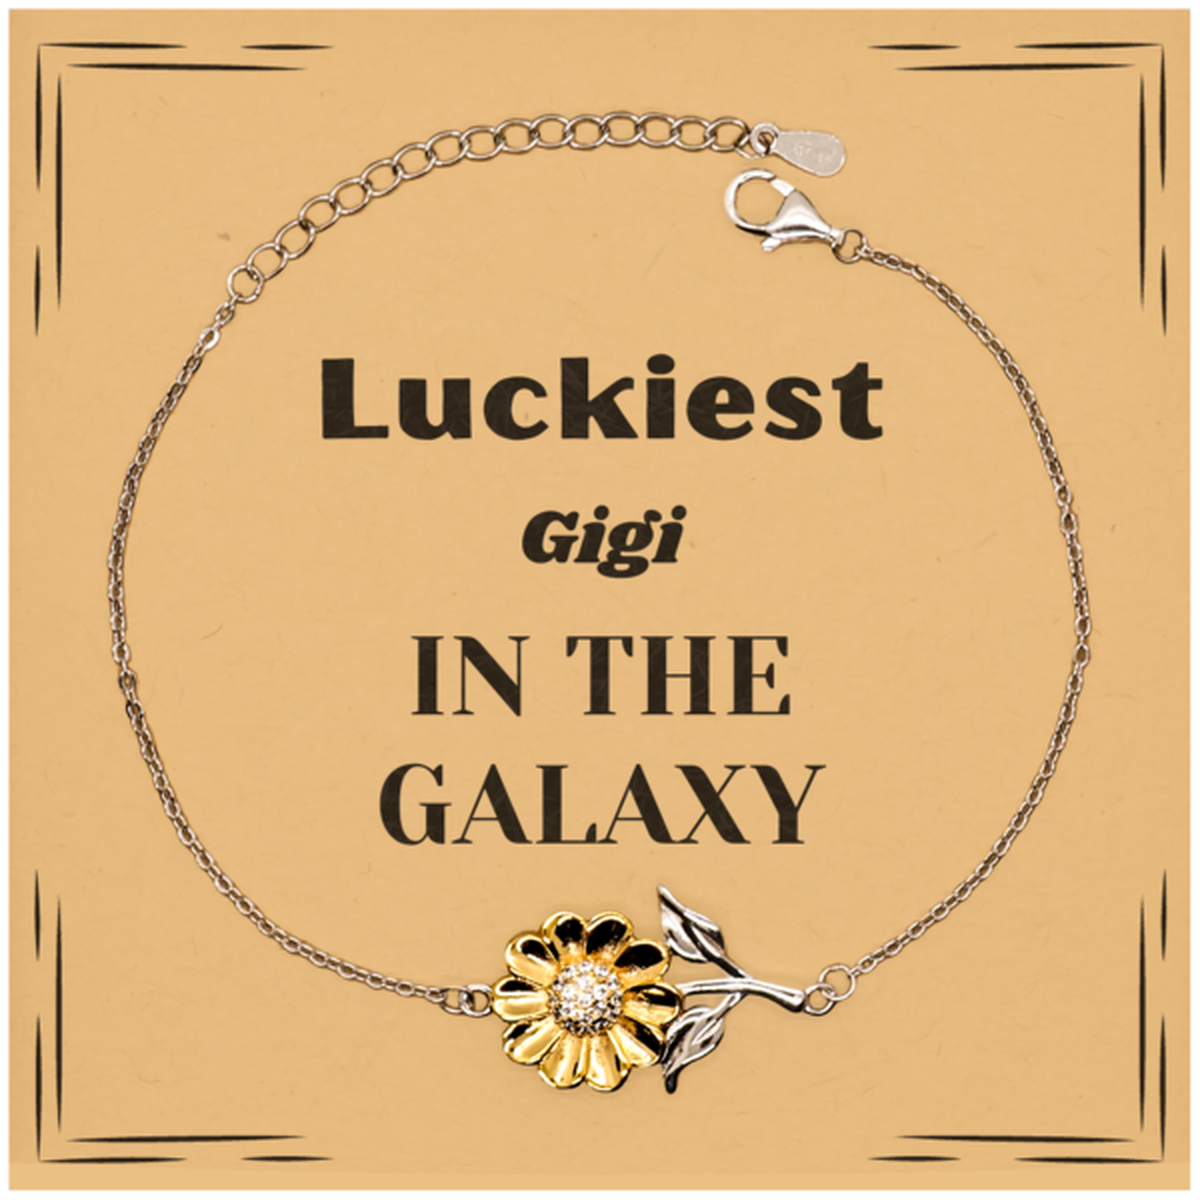 Luckiest Gigi in the Galaxy, To My Gigi Message Card Gifts, Christmas Gigi Sunflower Bracelet Gifts, X-mas Birthday Unique Gifts For Gigi Men Women